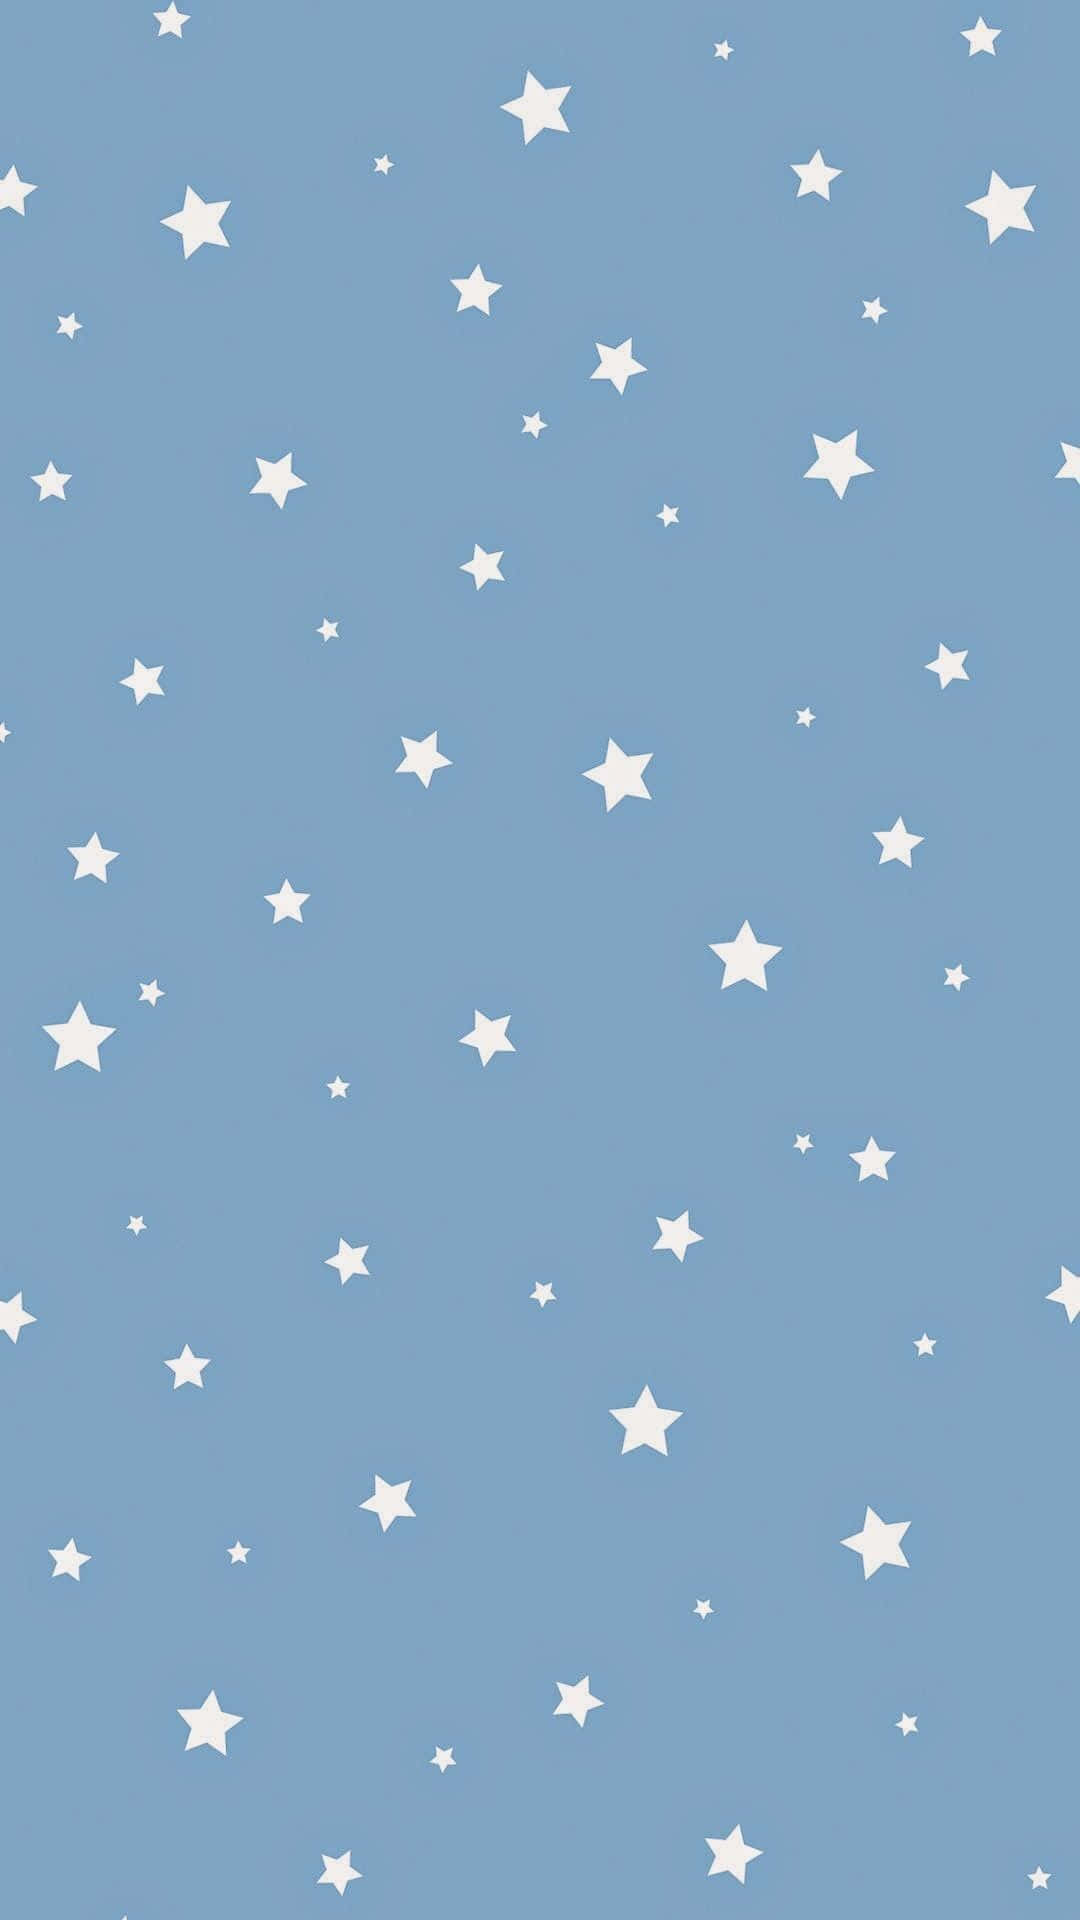 Mesmerizing Aesthetic Star Wallpaper